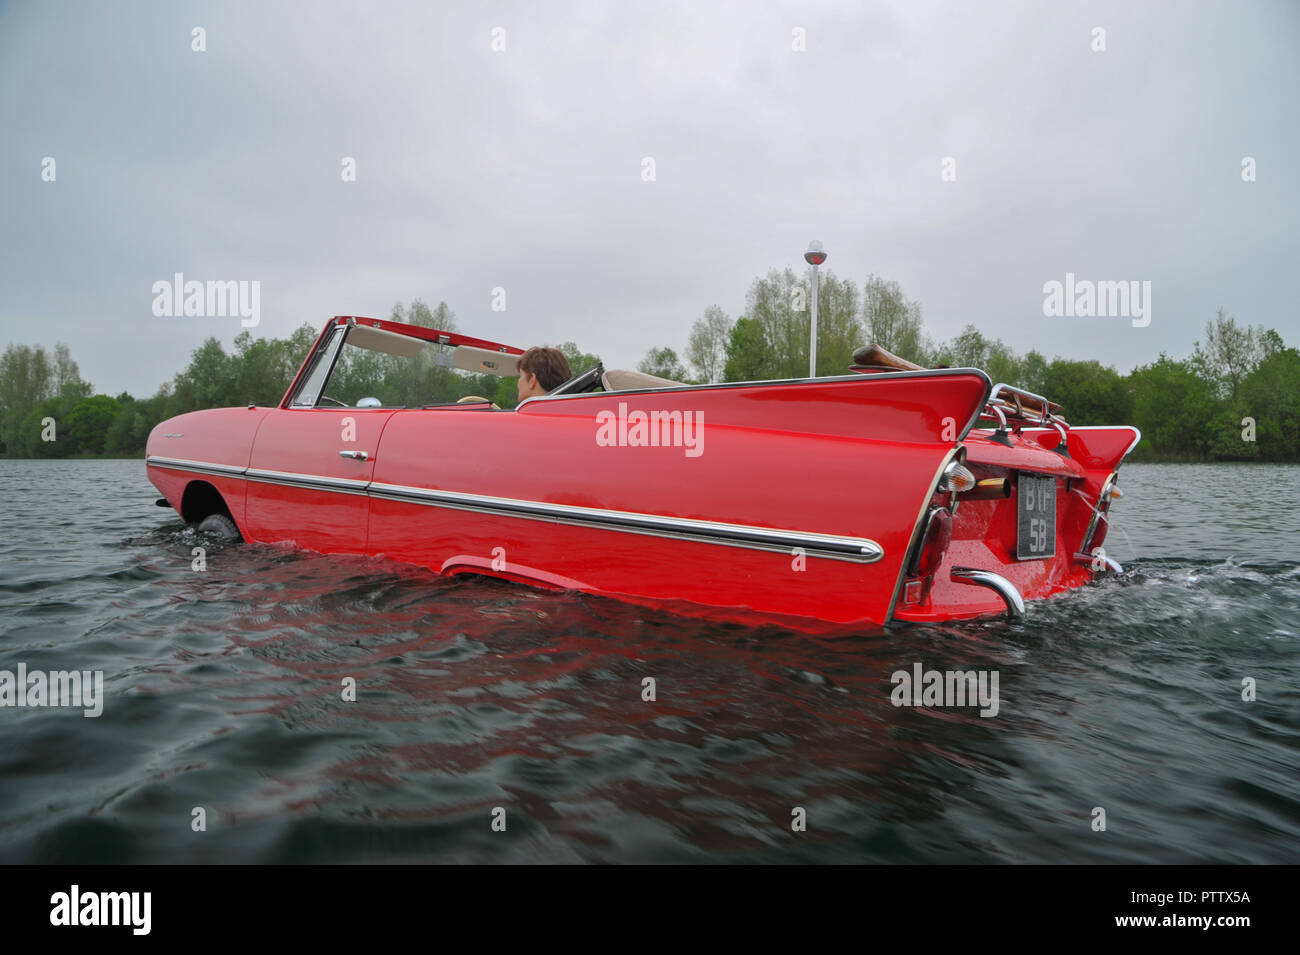 Amphicar - 1960s British amphibious car on land and water Stock Photo